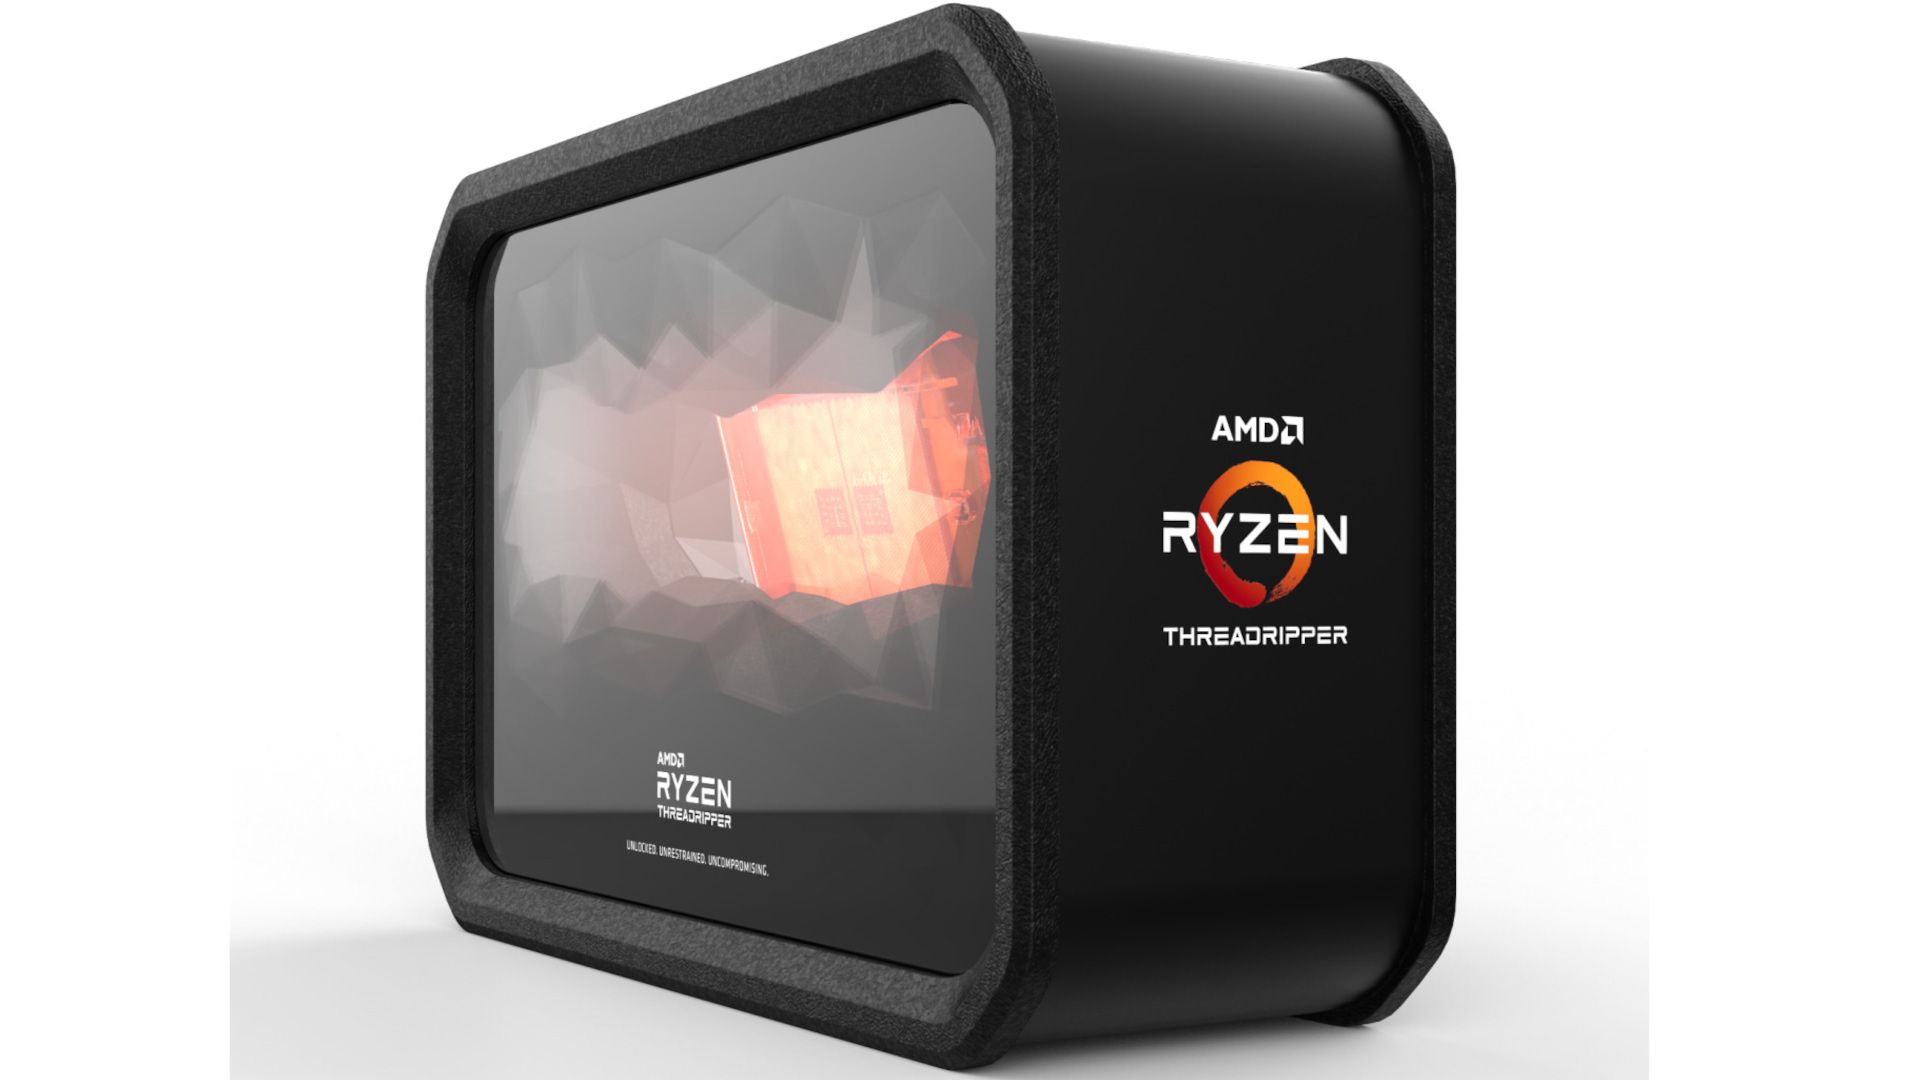 AMD Ryzen TR 2920X 2